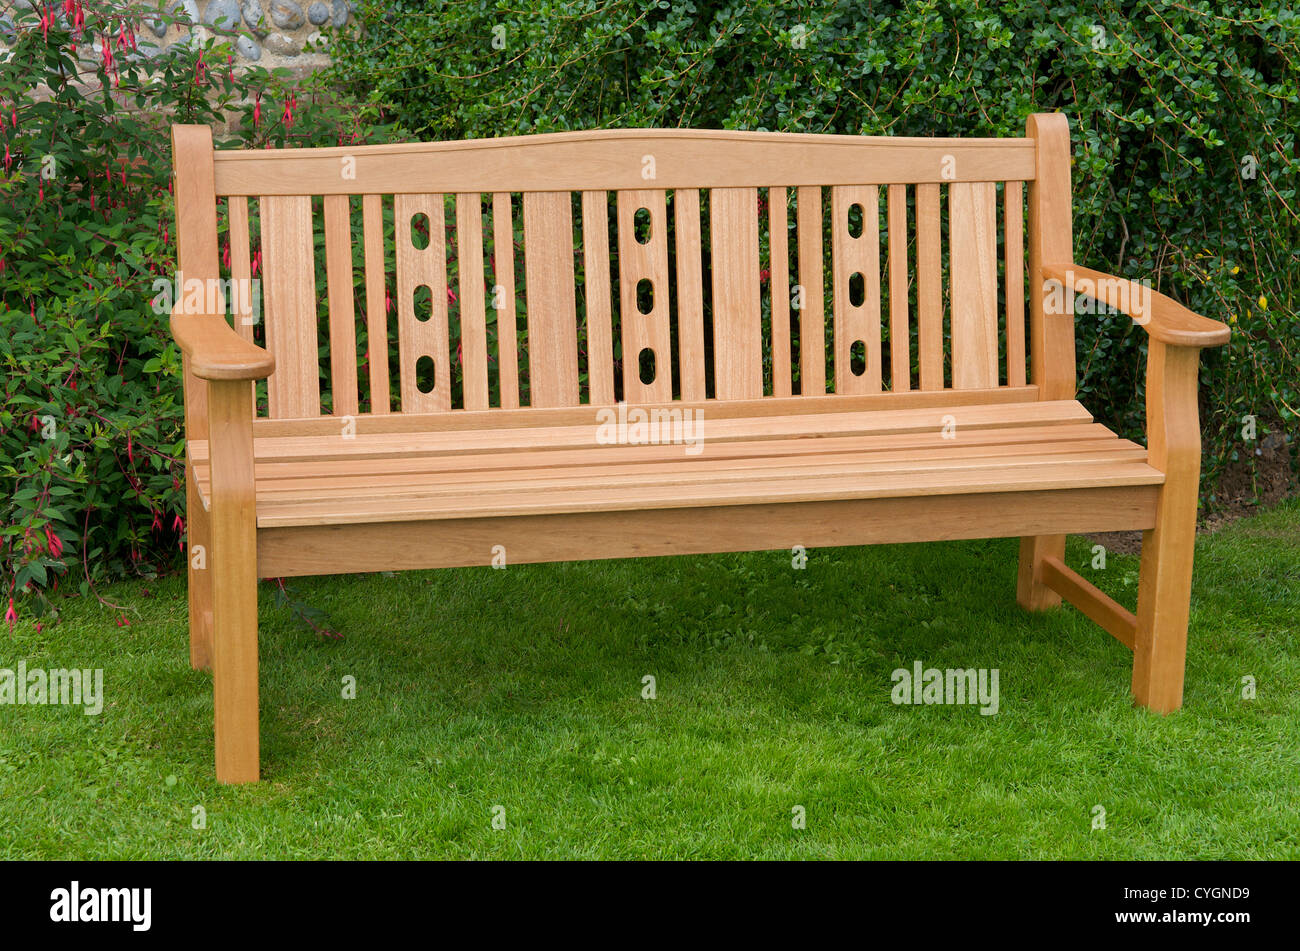 Wooden garden bench Stock Photo - Alamy